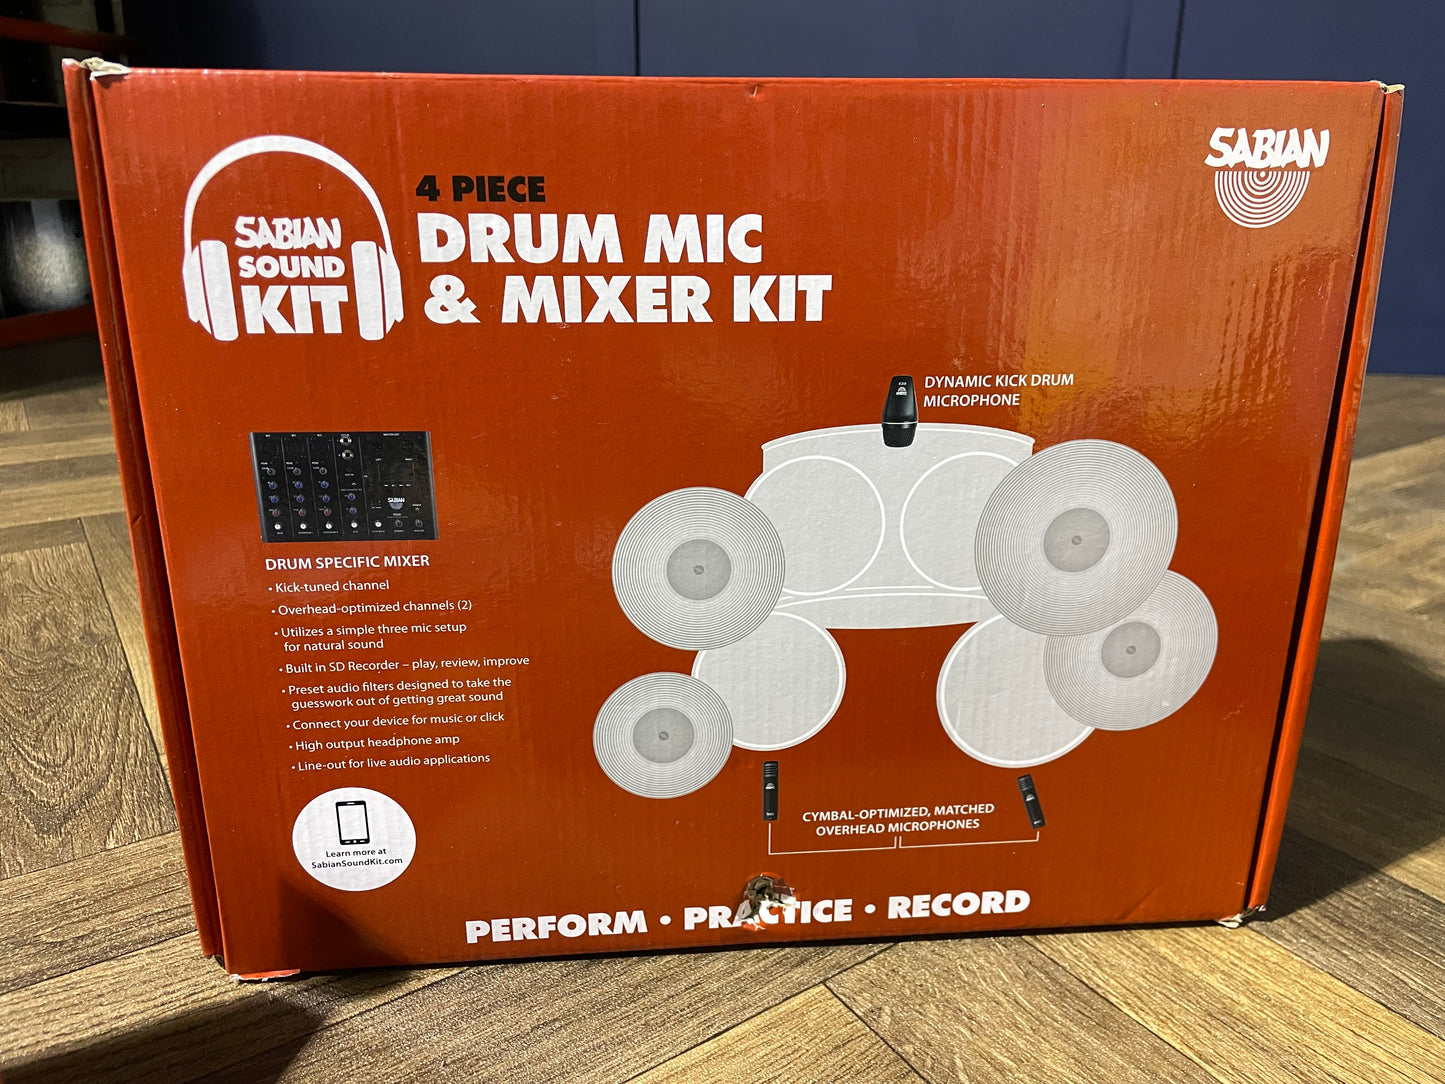 Sabian Sound Kit Complete 4 Piece Drum Mic & Mixer Kit #JU36